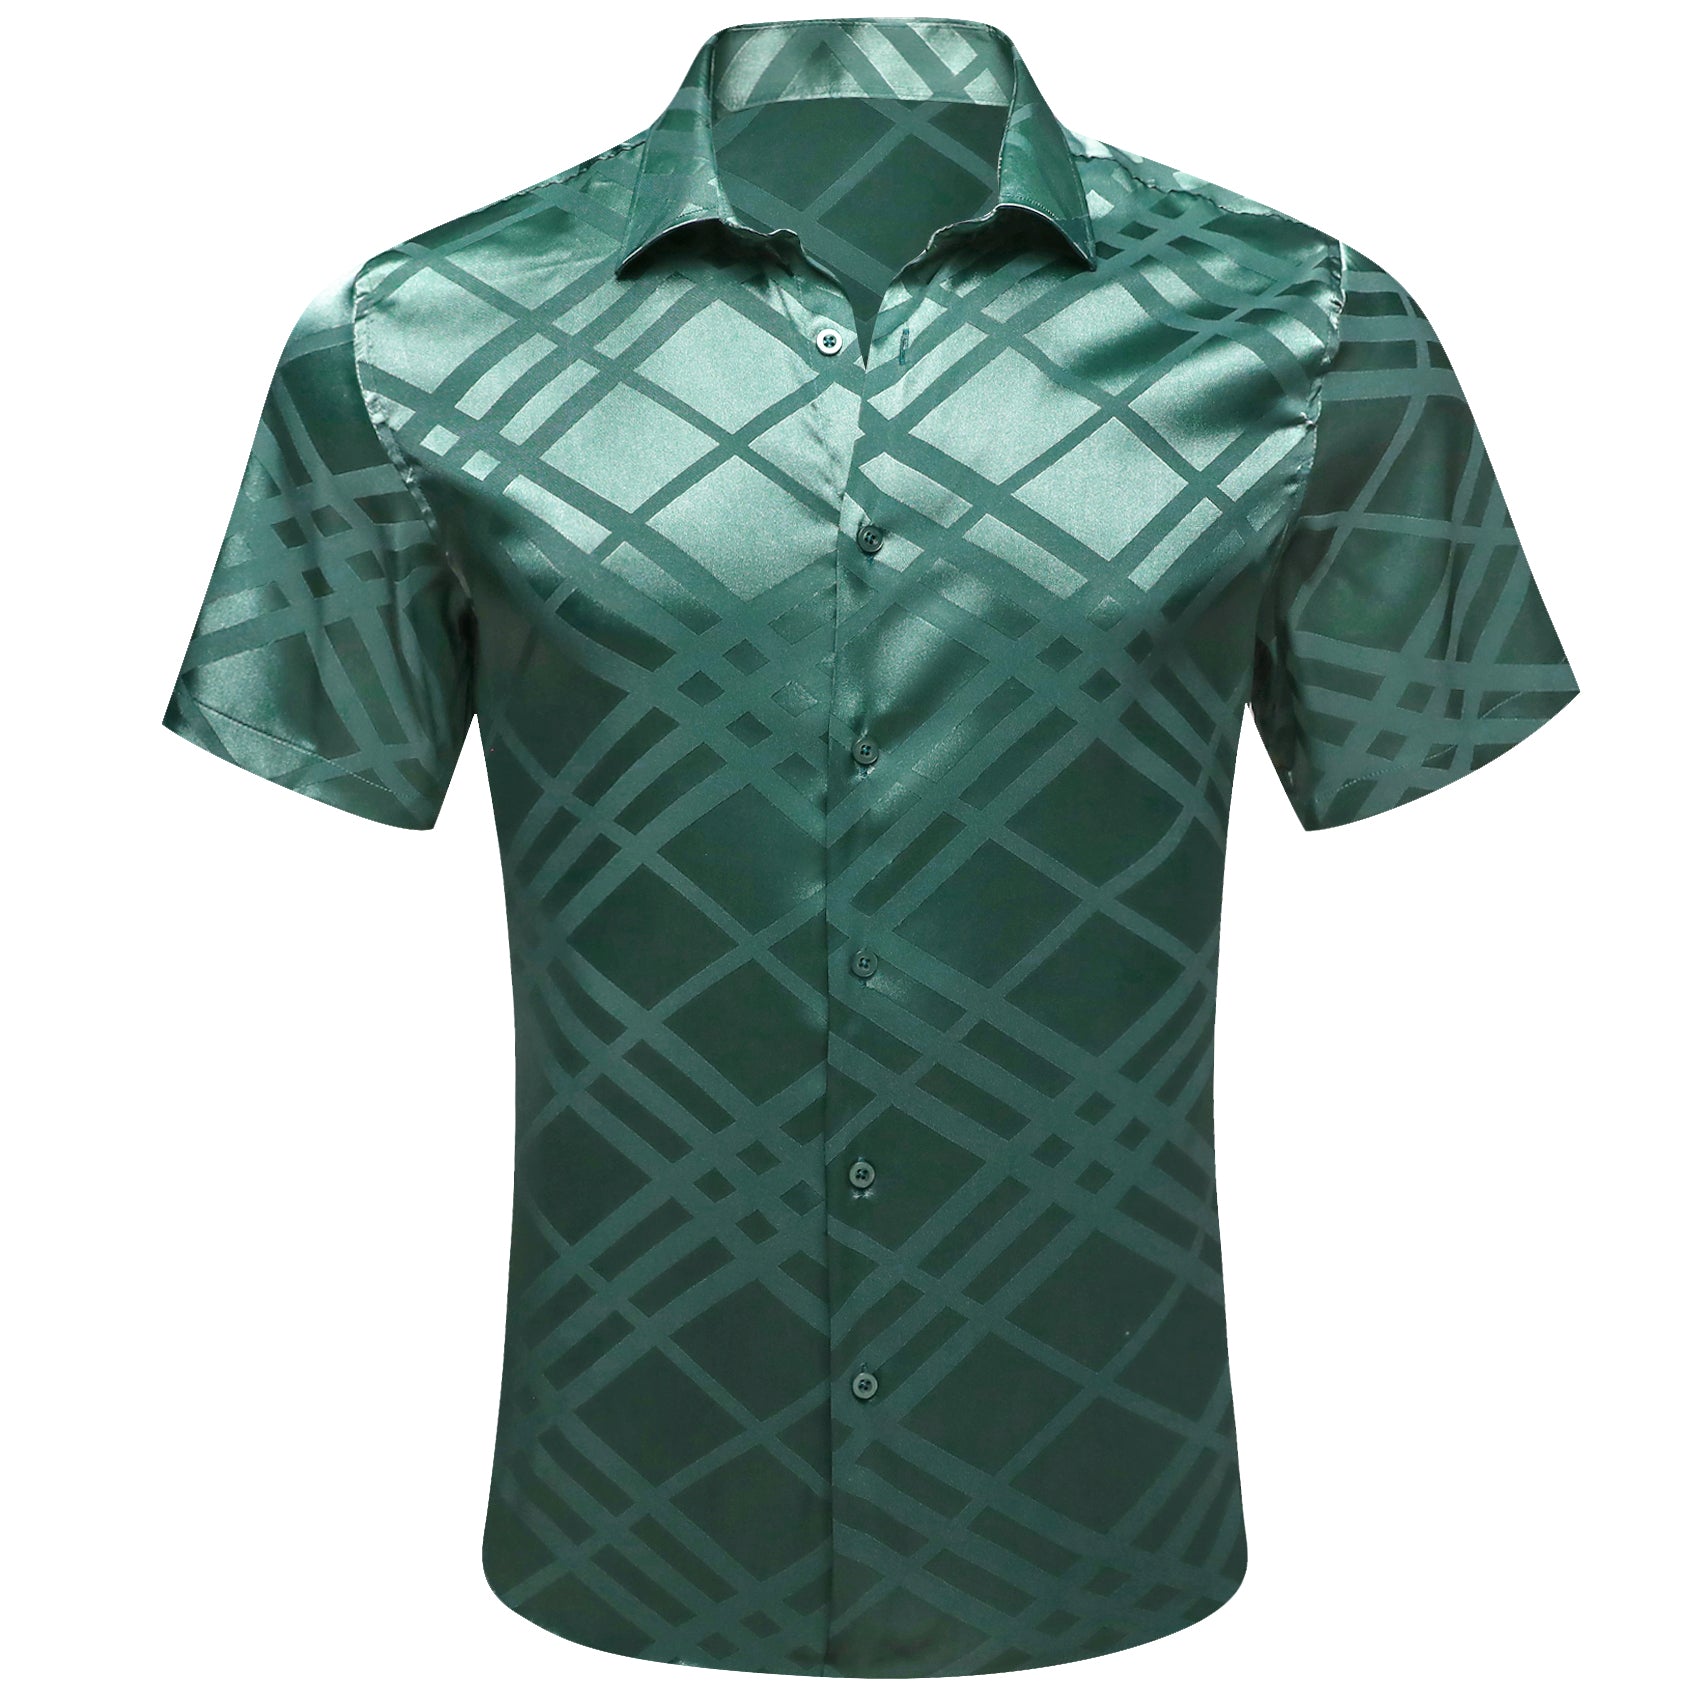 Barry Wang Dress Shirts for Men Green Plaid Top Short Sleeves Shirt